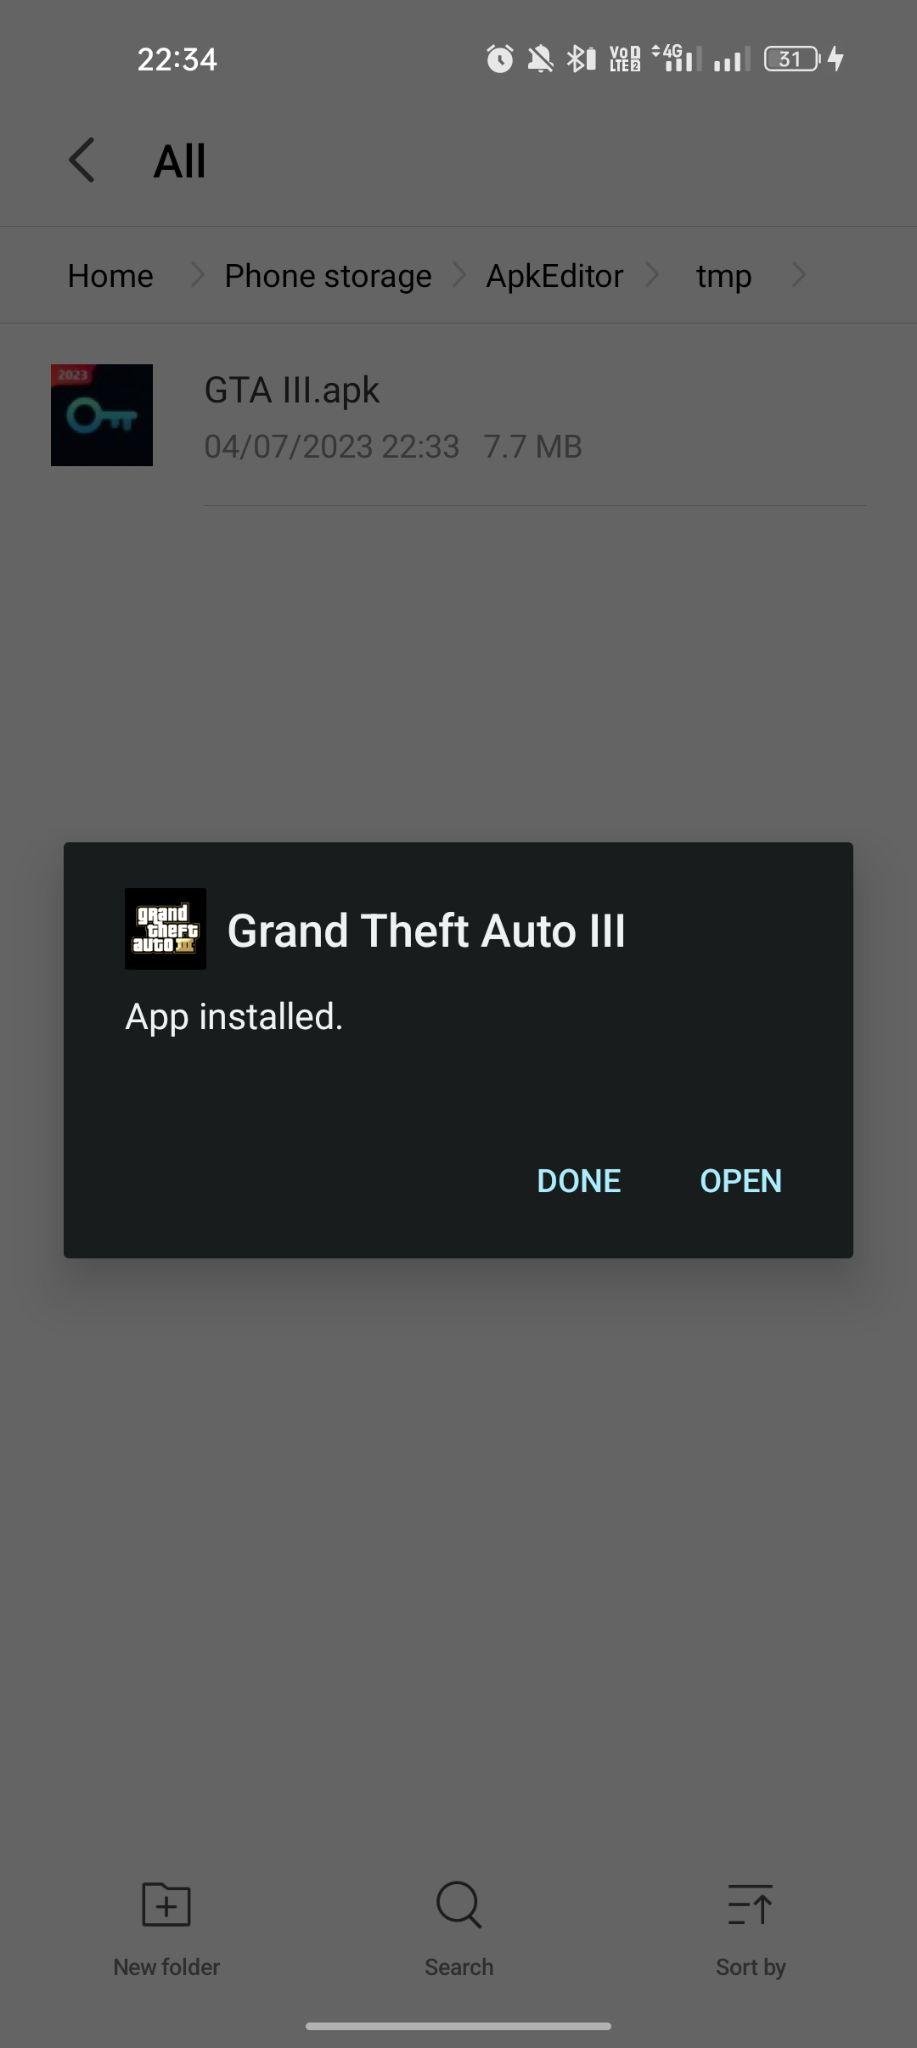 Grand Theft Auto III apk installed